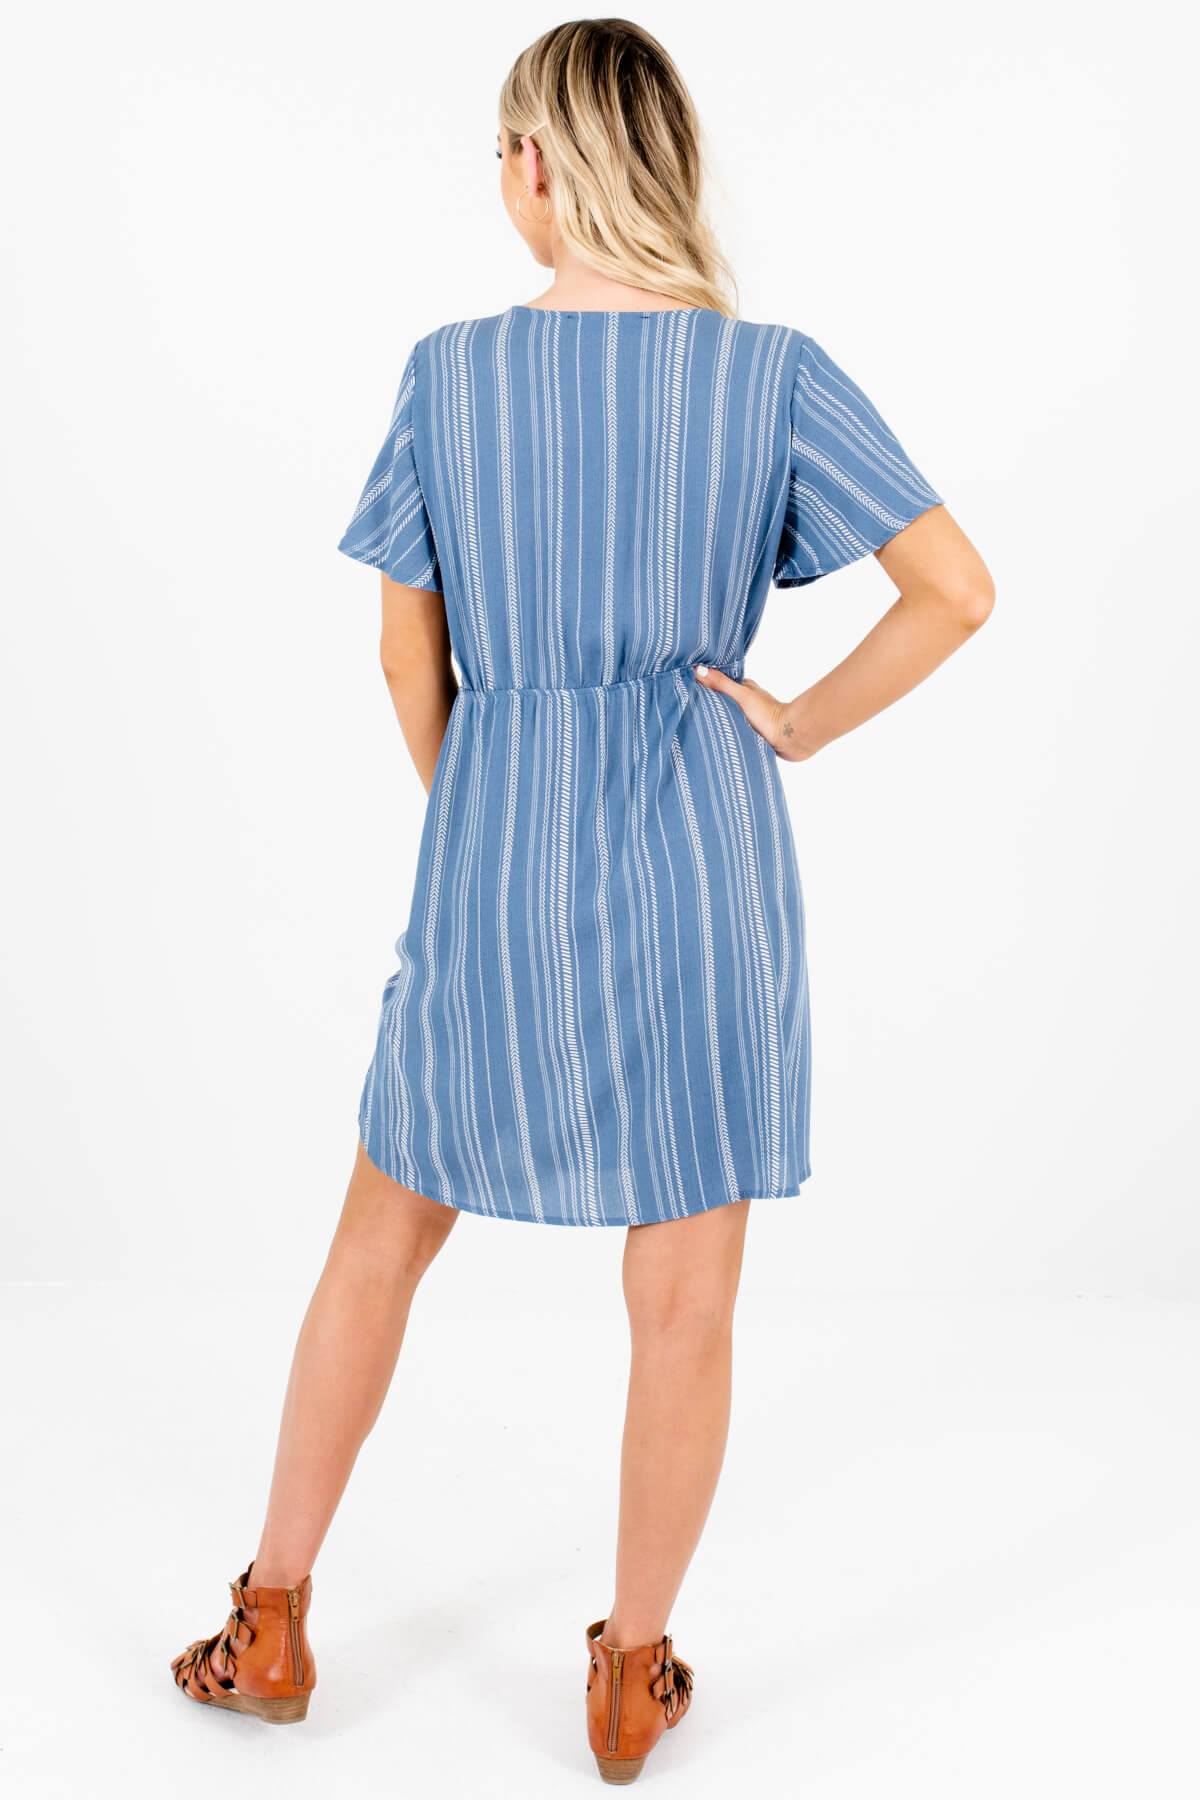 Blue White Patterned Tie Front Mini Dresses Affordable Online Boutique